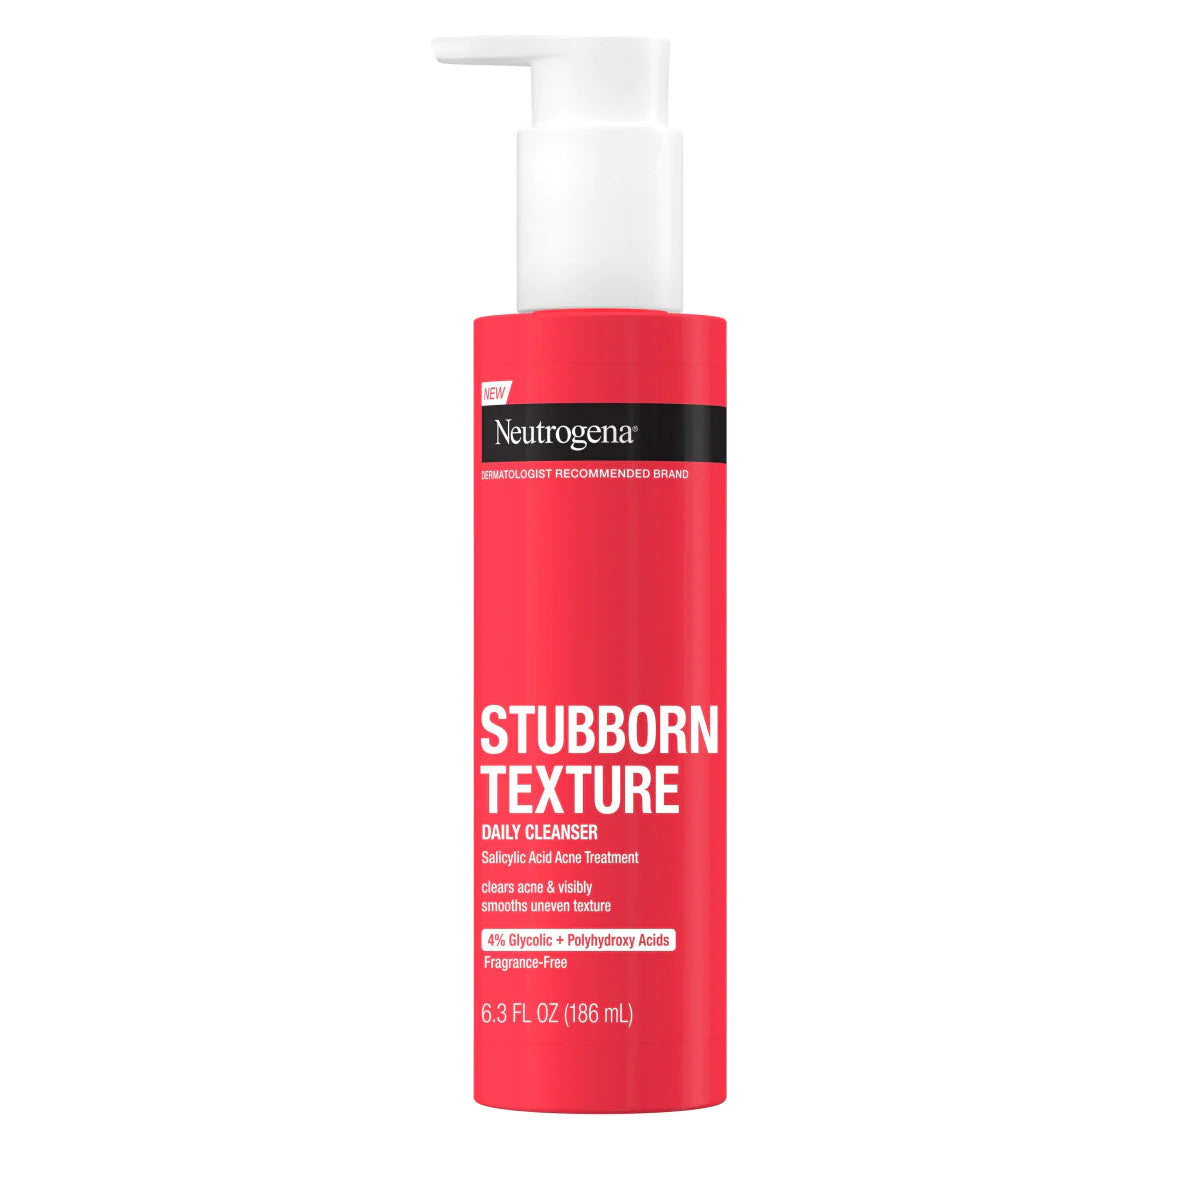 Neutrogena Stubborn Texture Daily Gel Cleanser 186ml